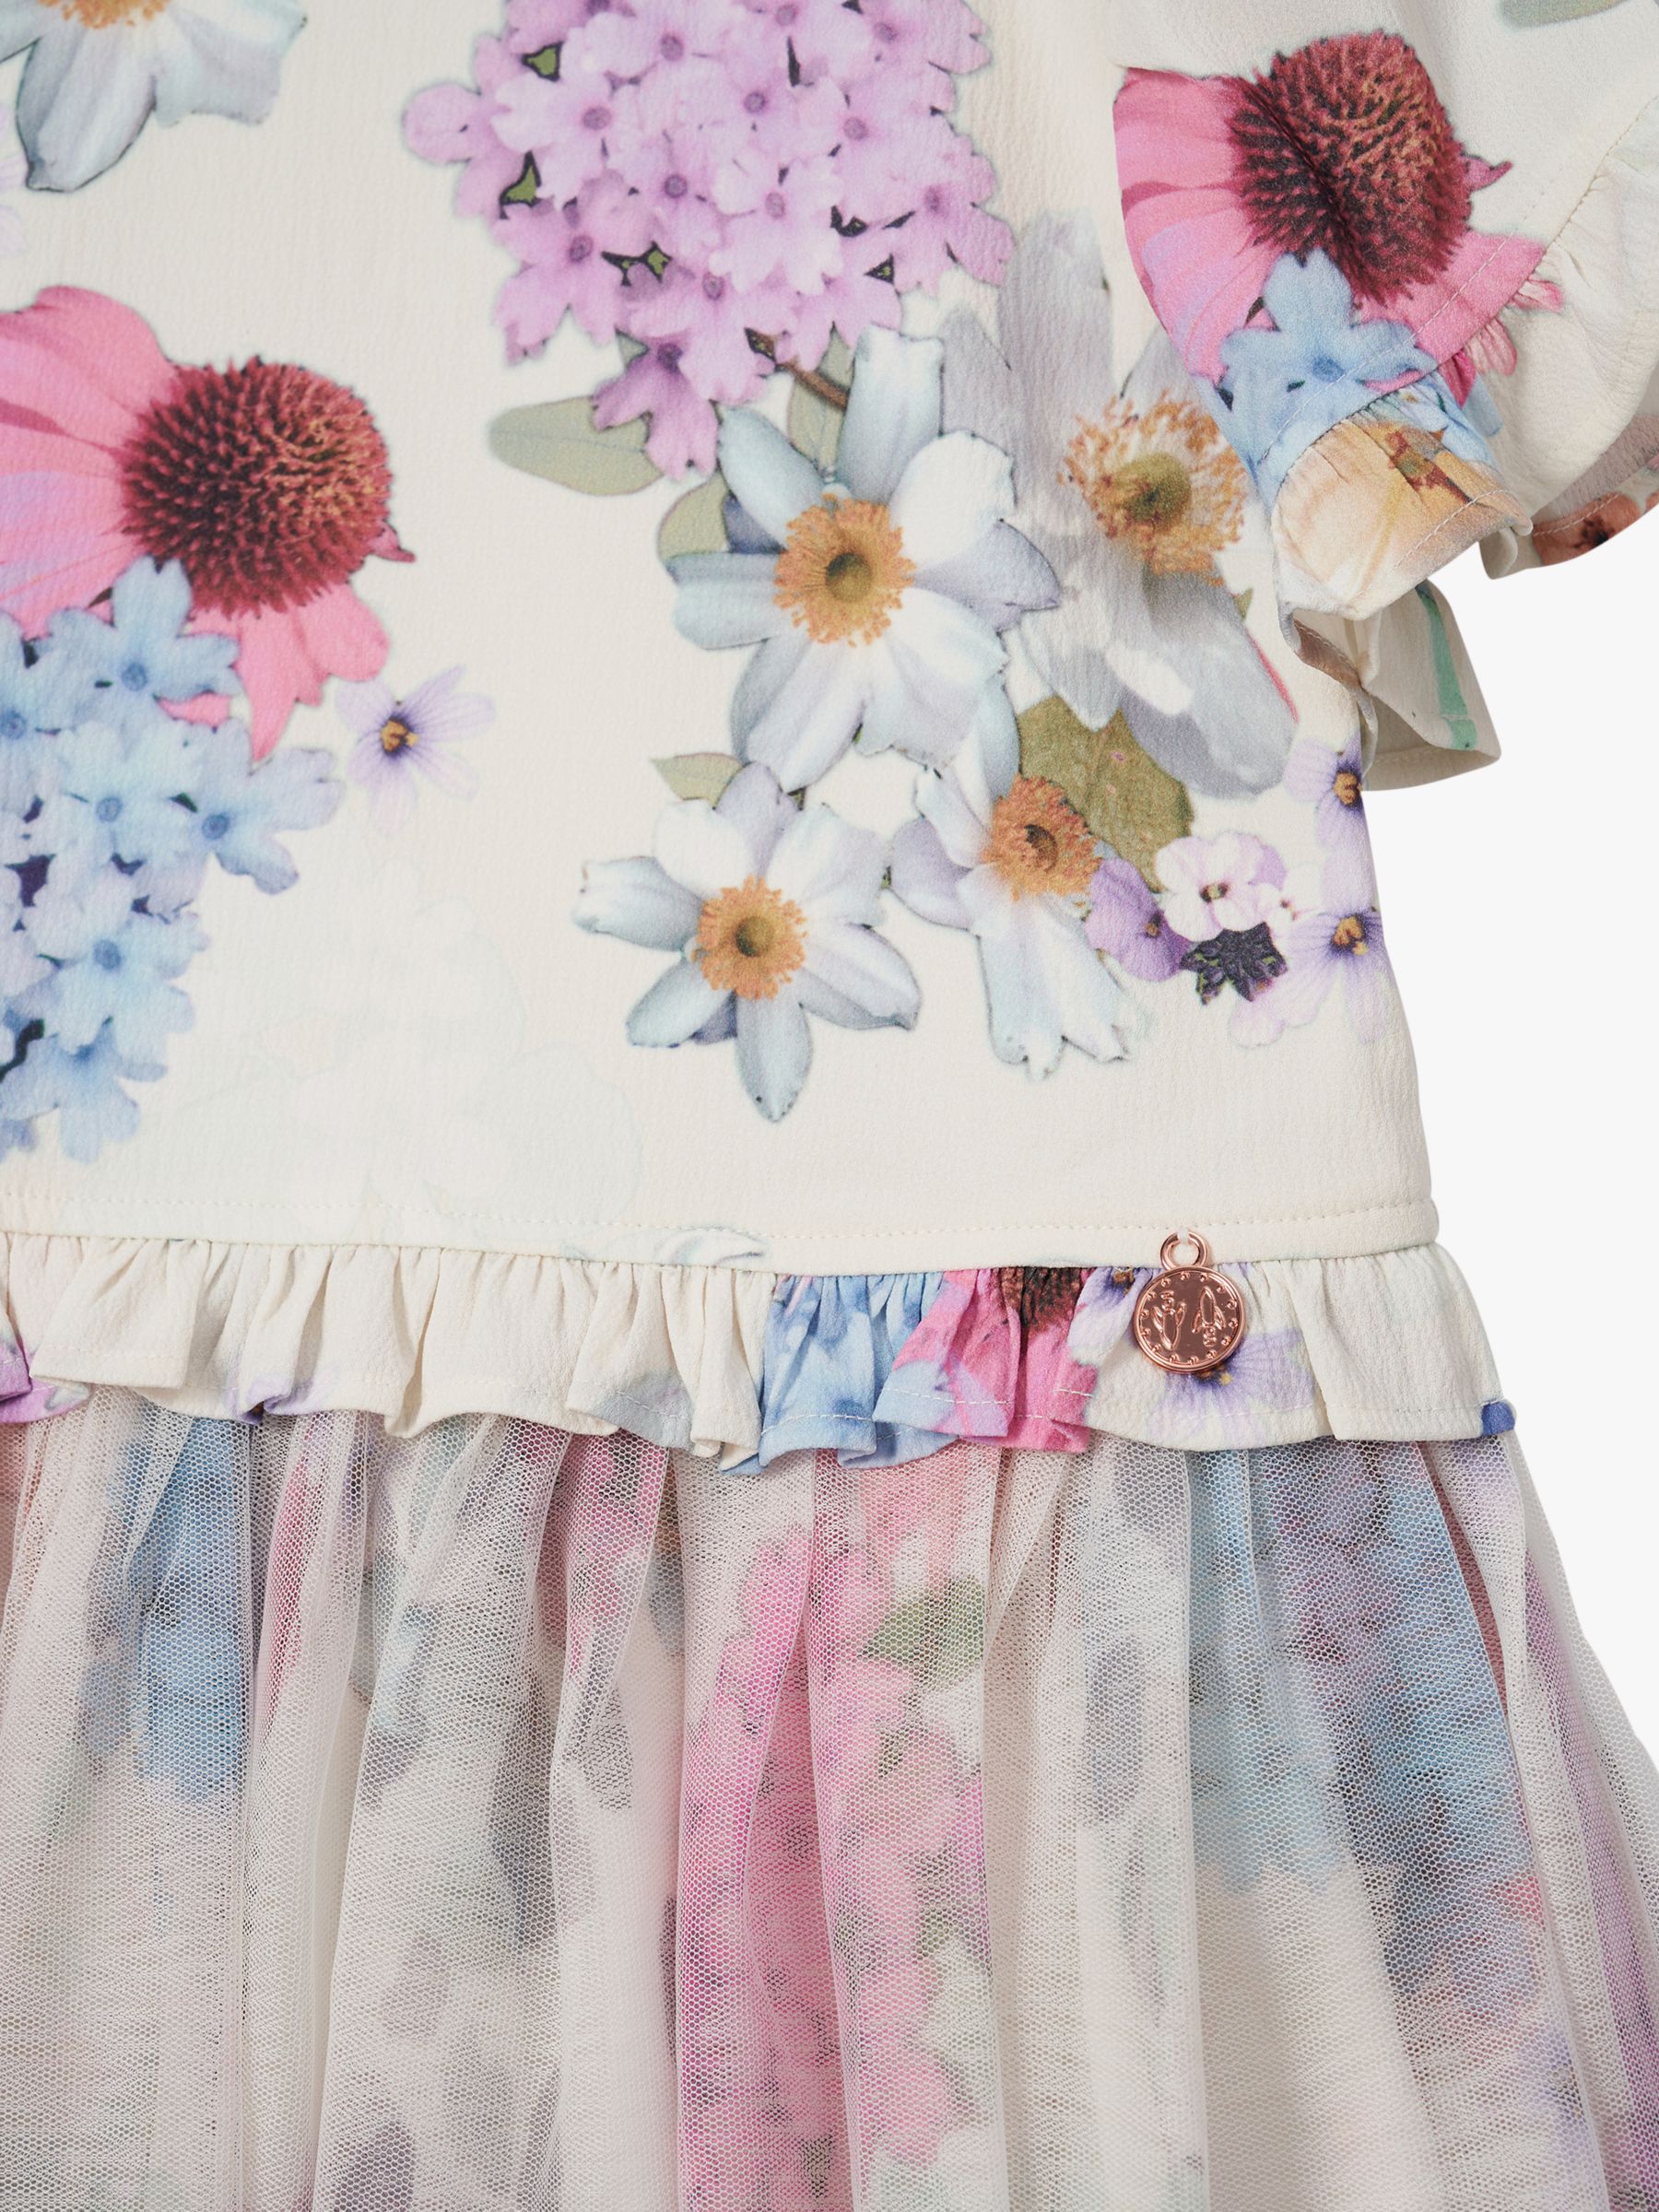 Angel & Rocket Kids' Azalea Floral Print Ballerina Dress, Ivory/Multi, 10 years